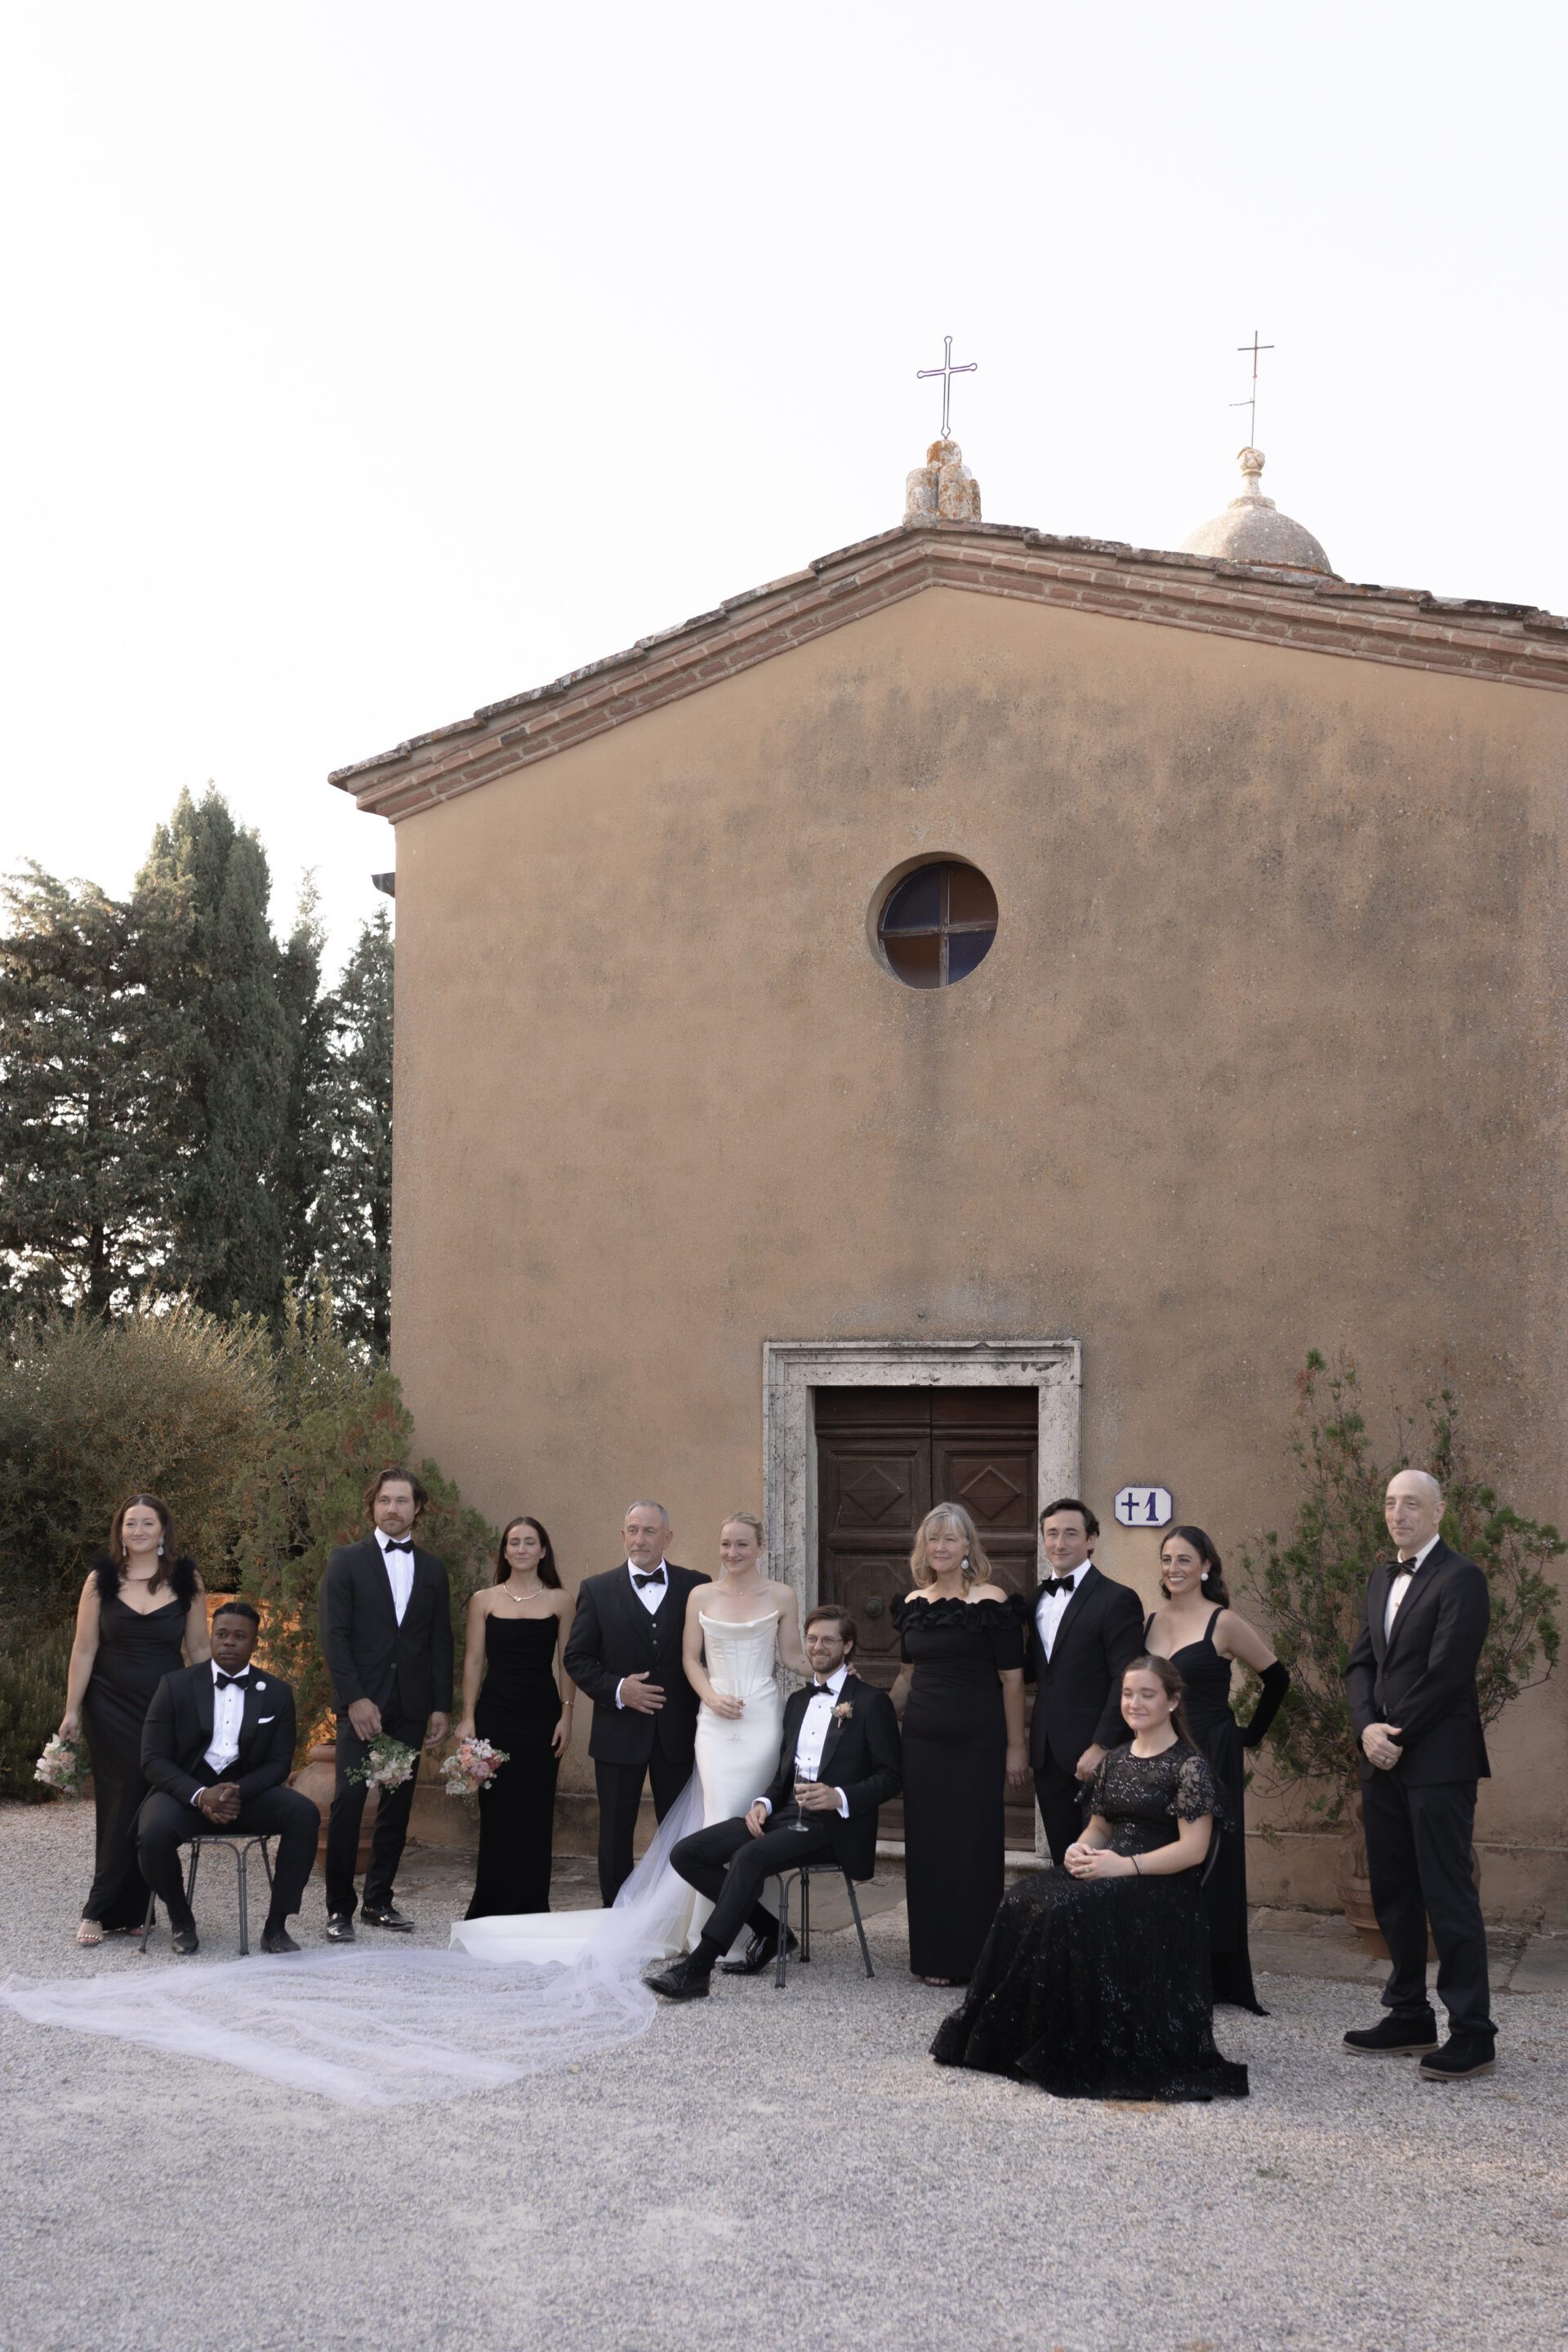 Italian wedding photography captures group photos at Tuscan wedding